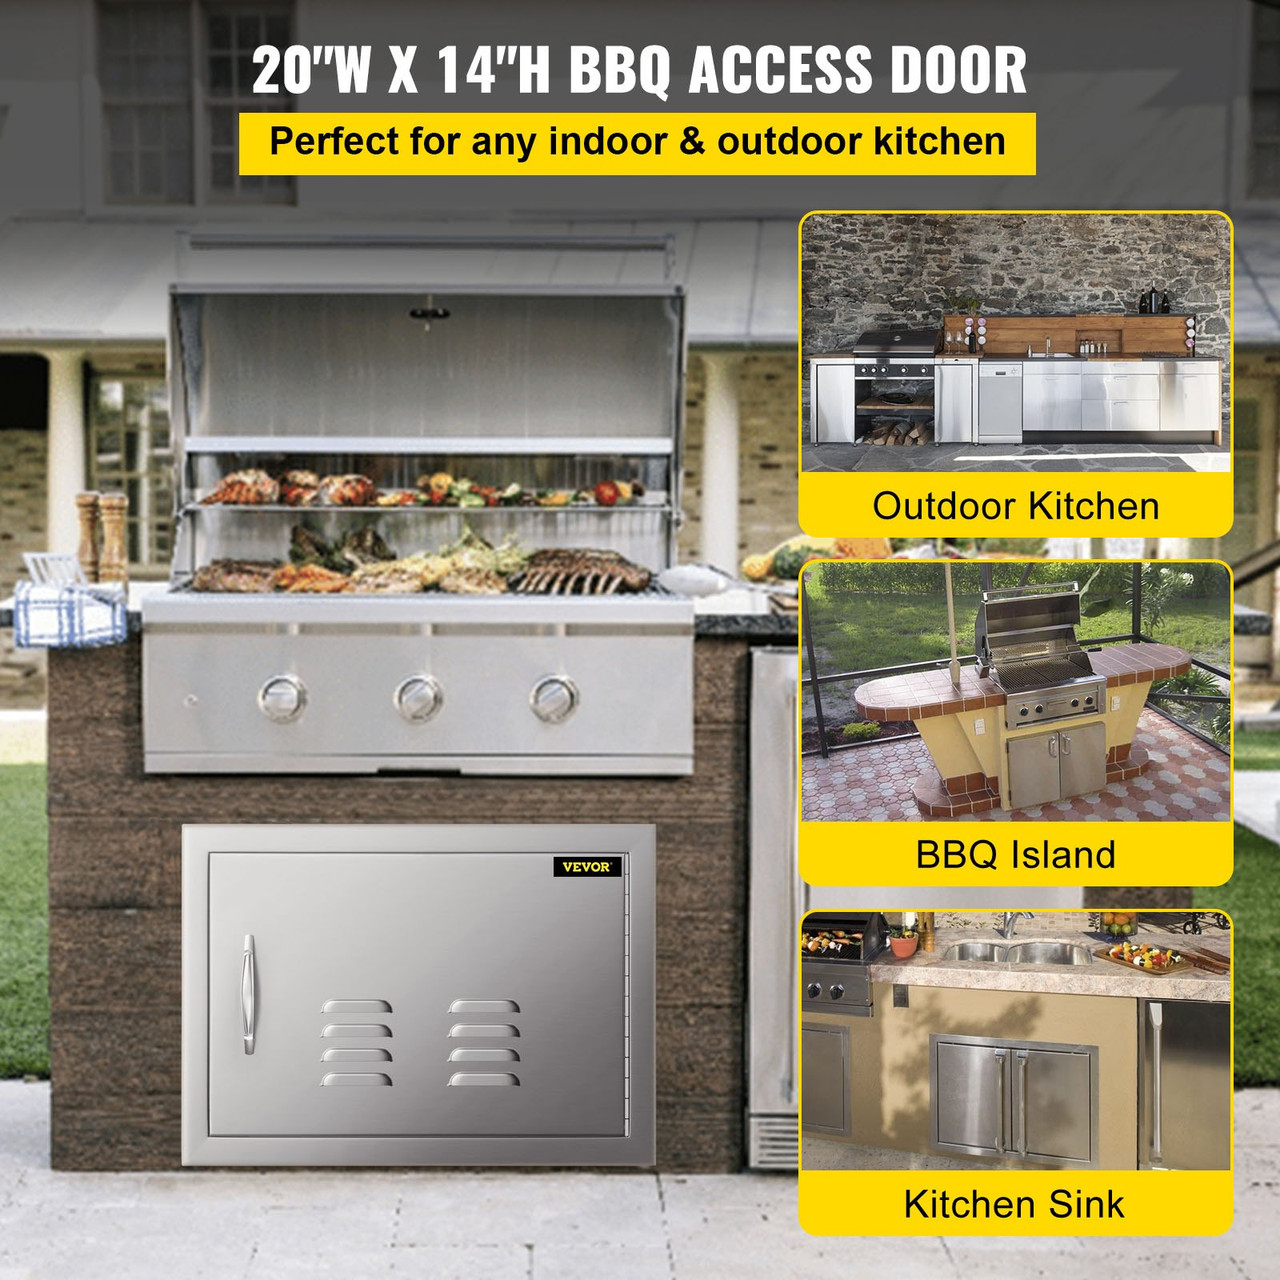 20W x 14H Inch BBQ Access Single Door with Vents Horizontal BBQ Island Door Stainless Steel Outdoor Kitchen Doors for Commercial BBQ Grid